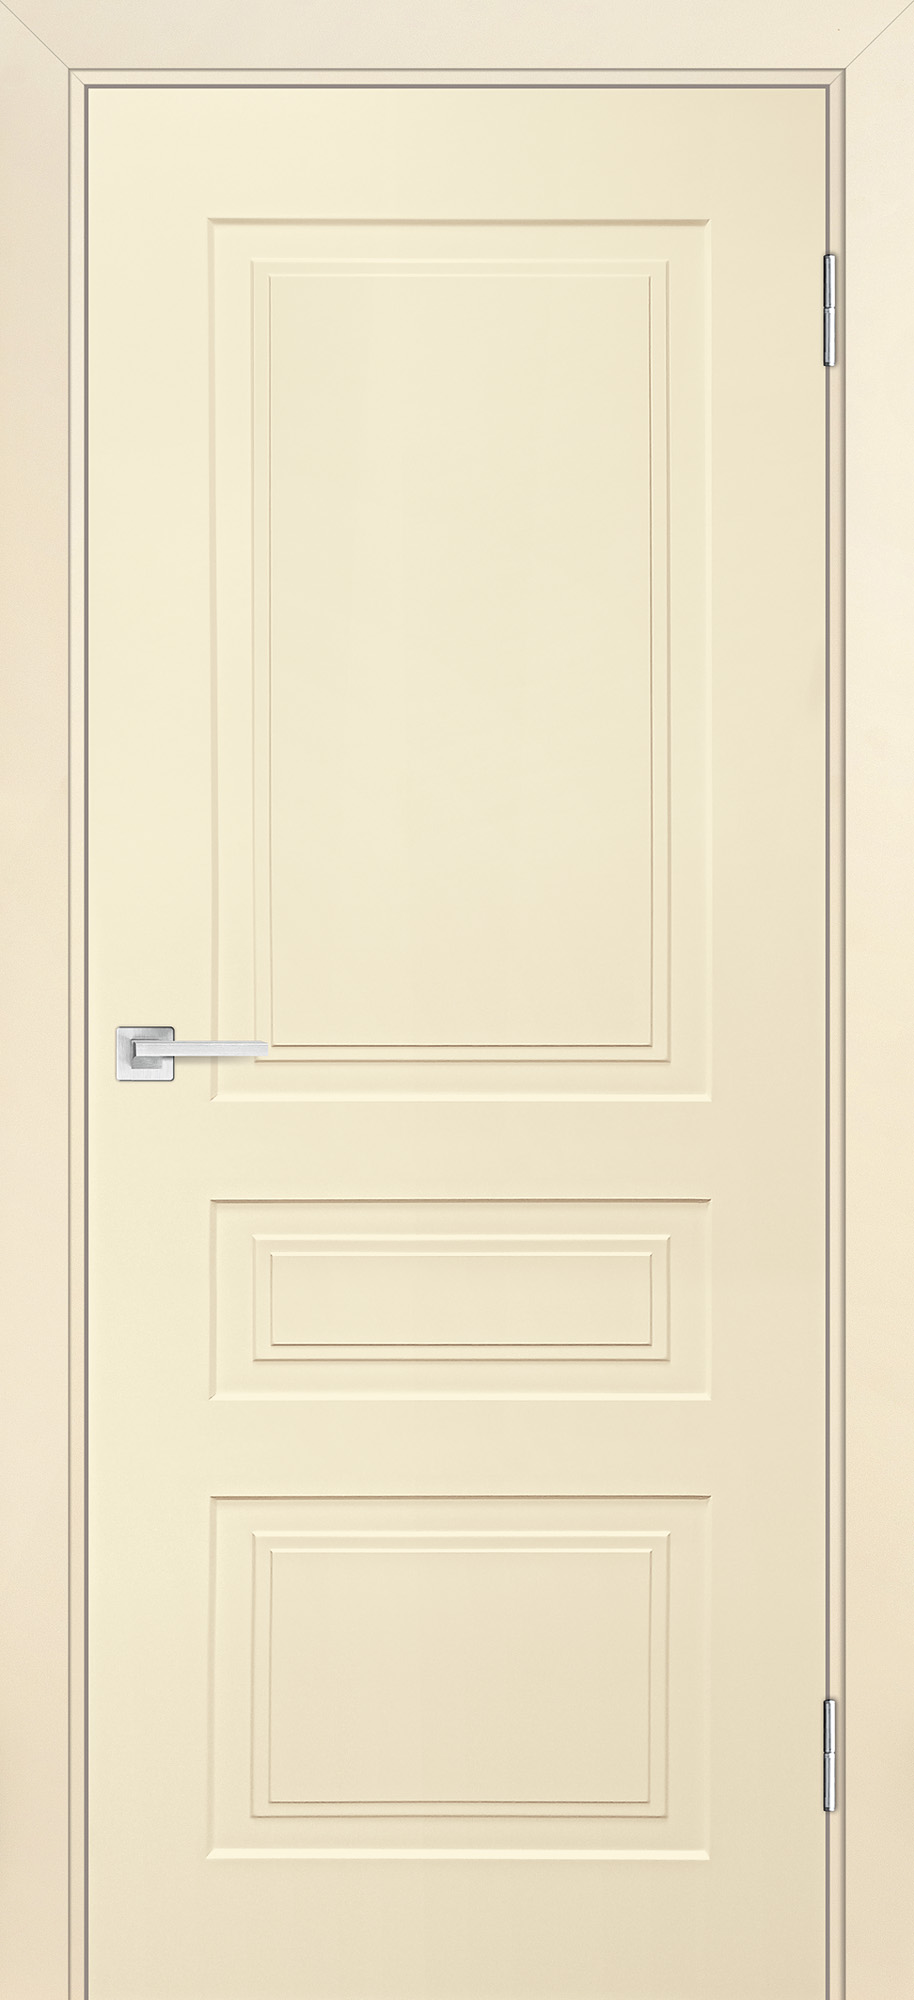 Двери крашеные (Эмаль) ТЕКОНА Смальта-Лайн 05 глухое Айвори ral 1013 размер 190 х 55 см. артикул F0000093247